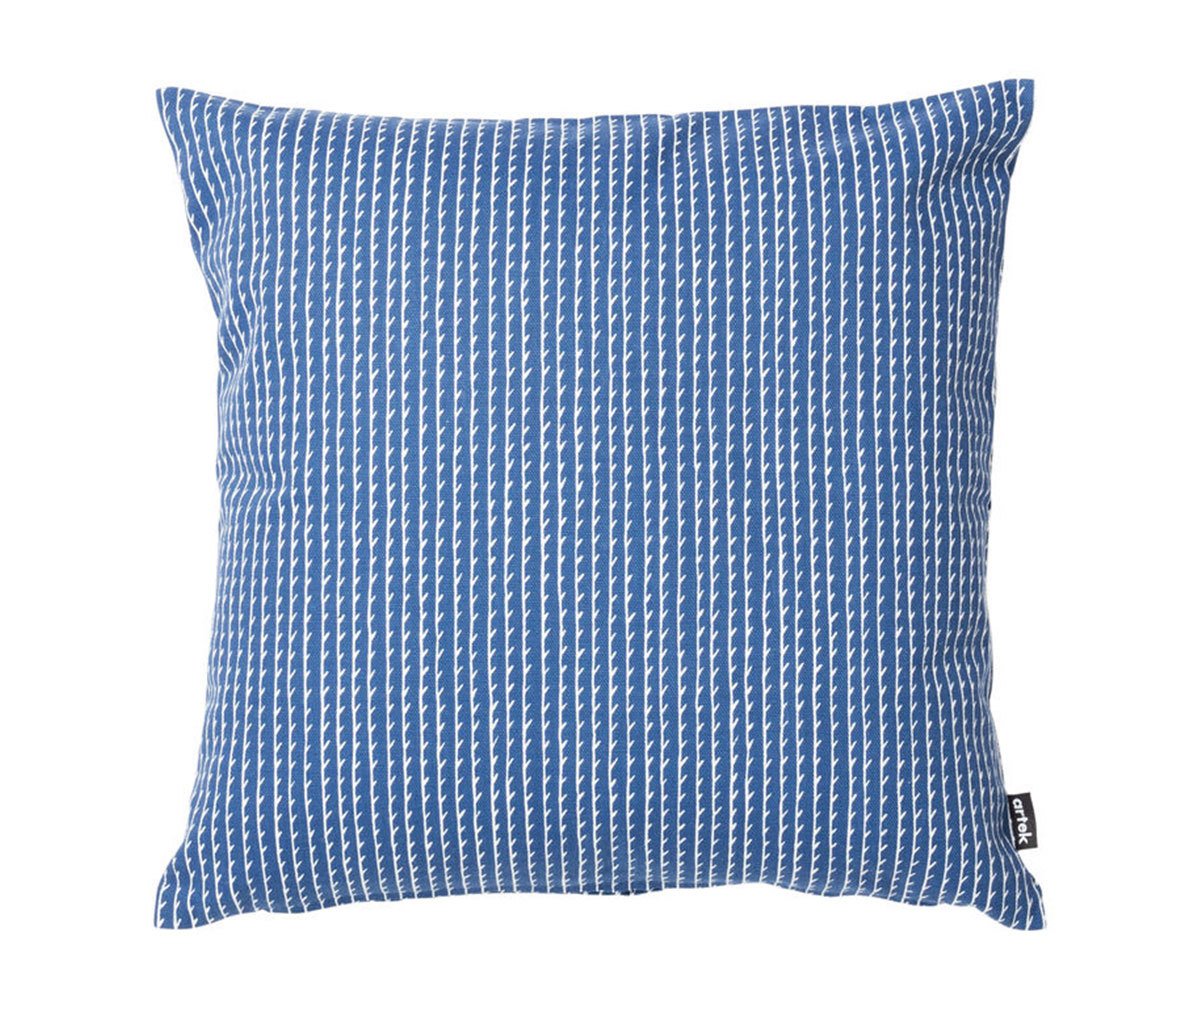 Artek Rivi Cushion Cover Blue/White, 40 x 40 cm